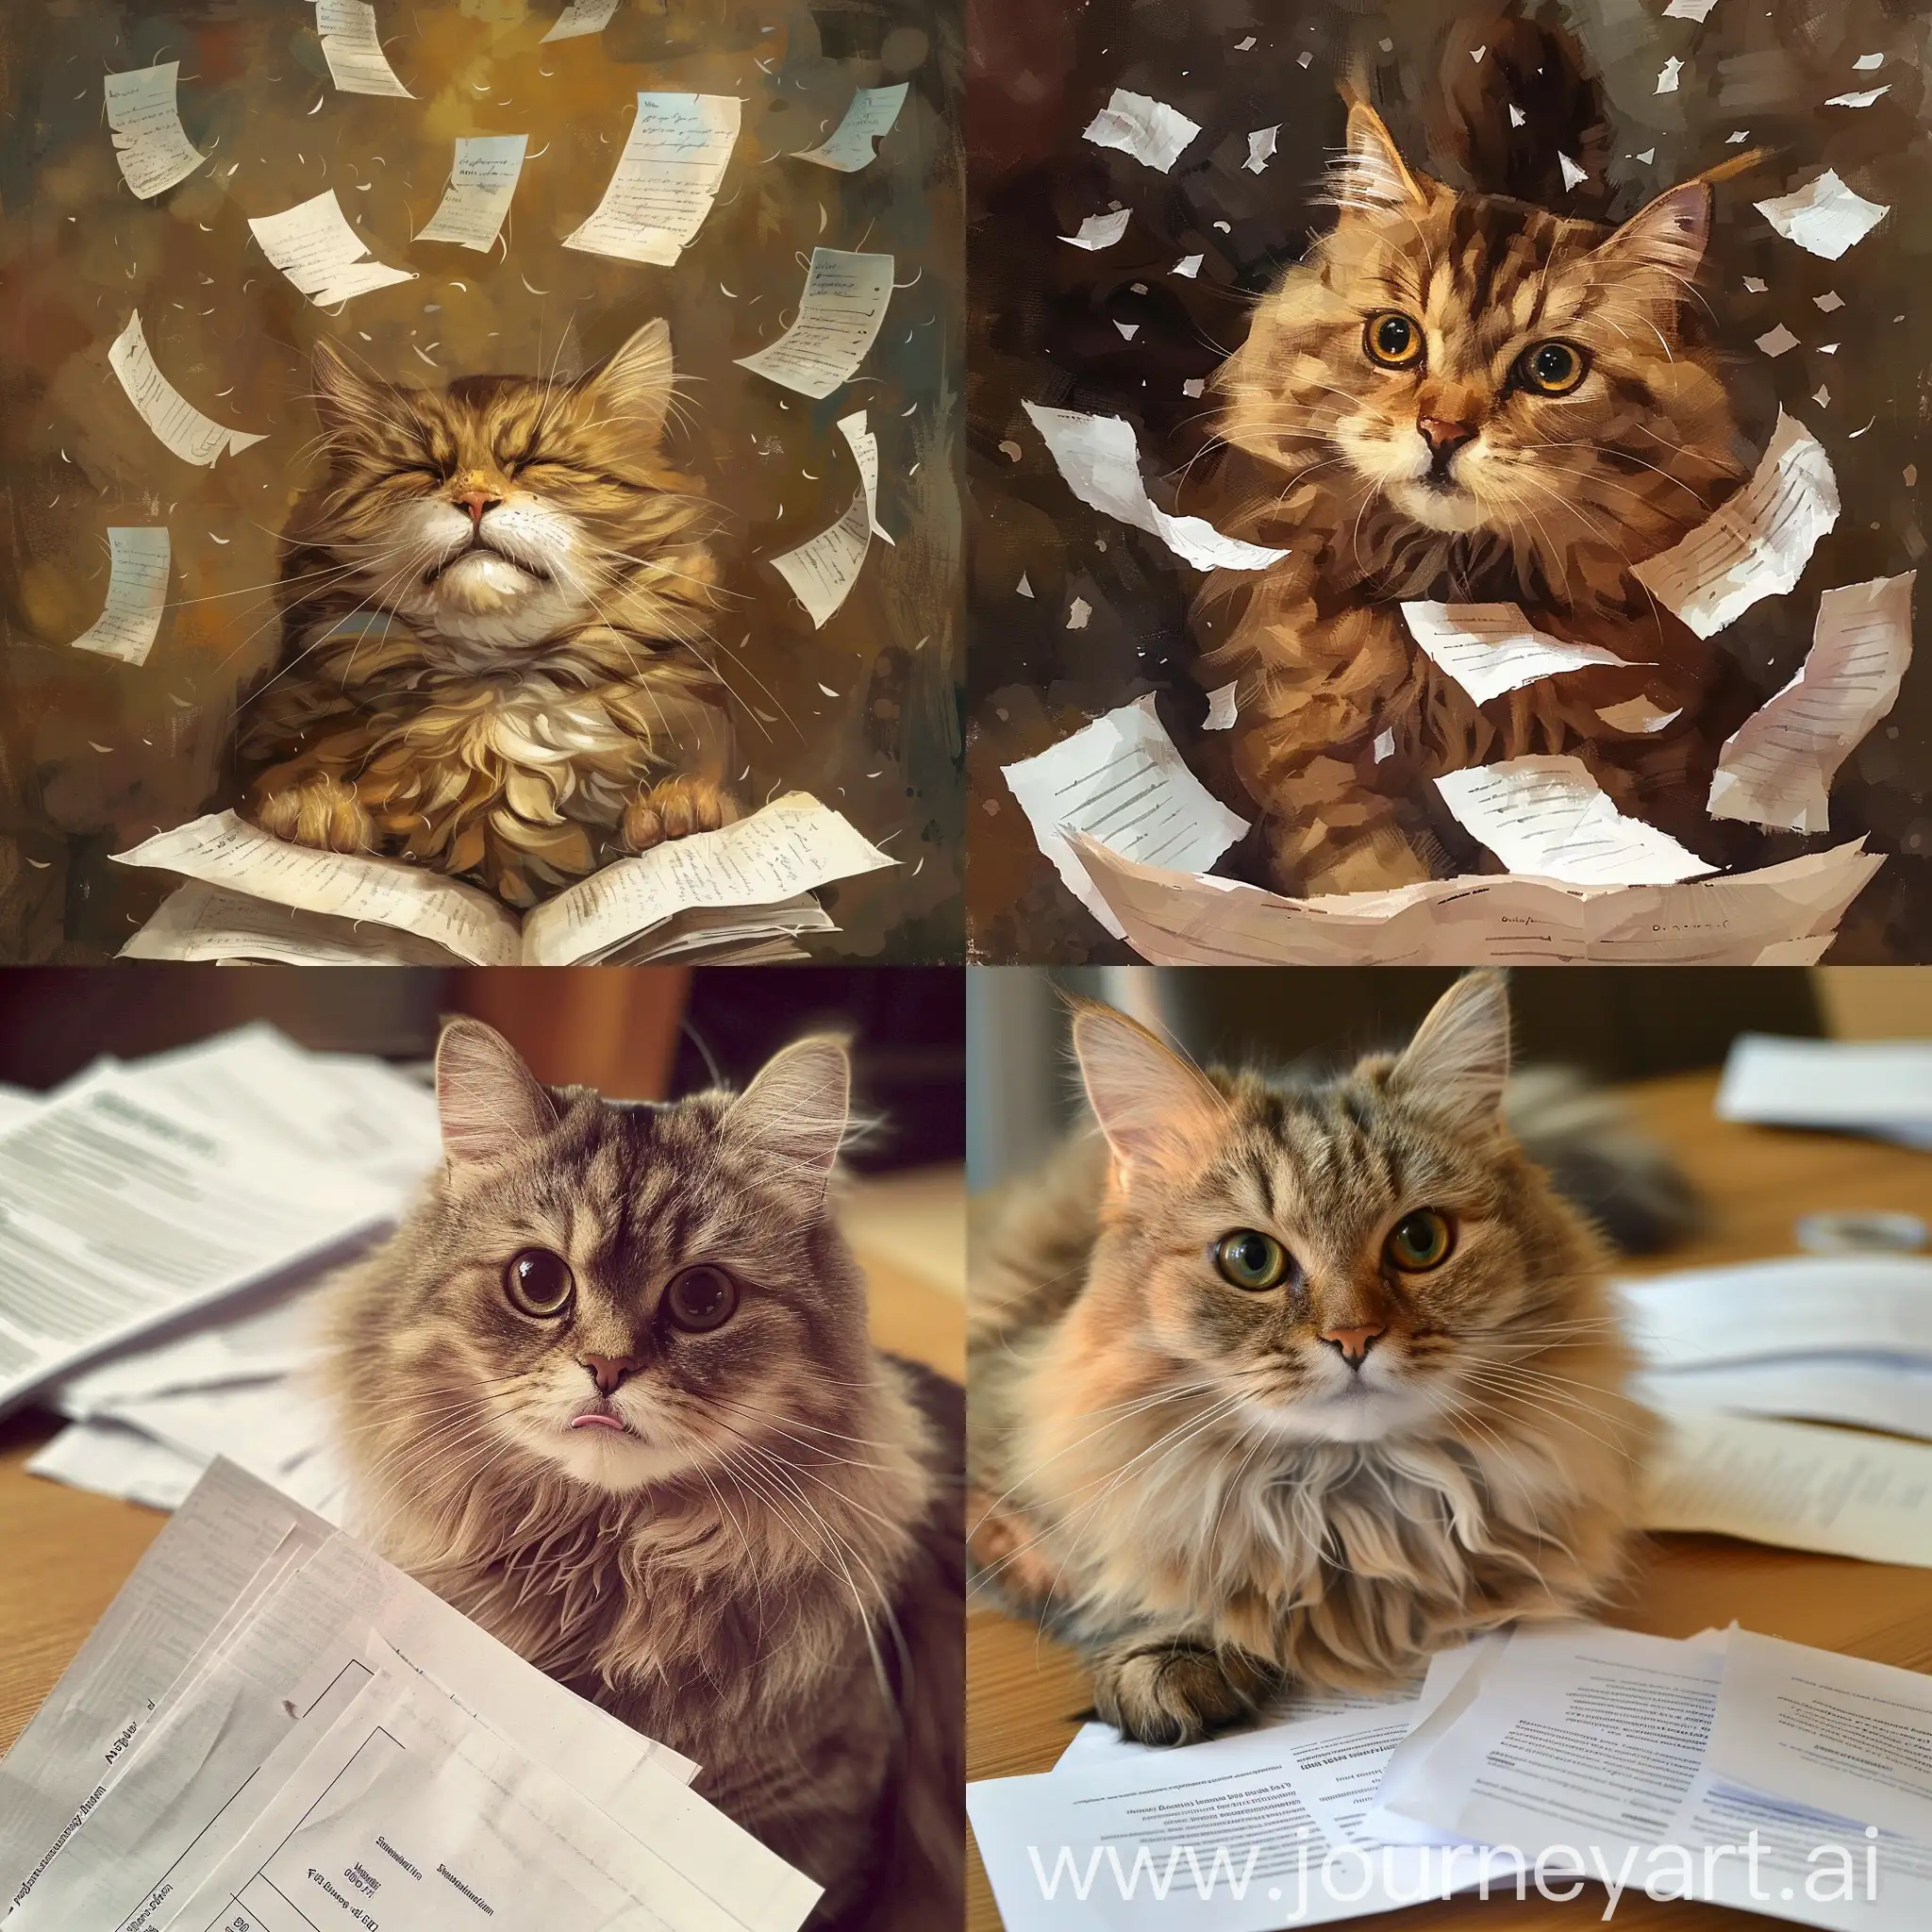 Observant-Picky-Cat-Surveys-Papers-in-Wonderland-Style